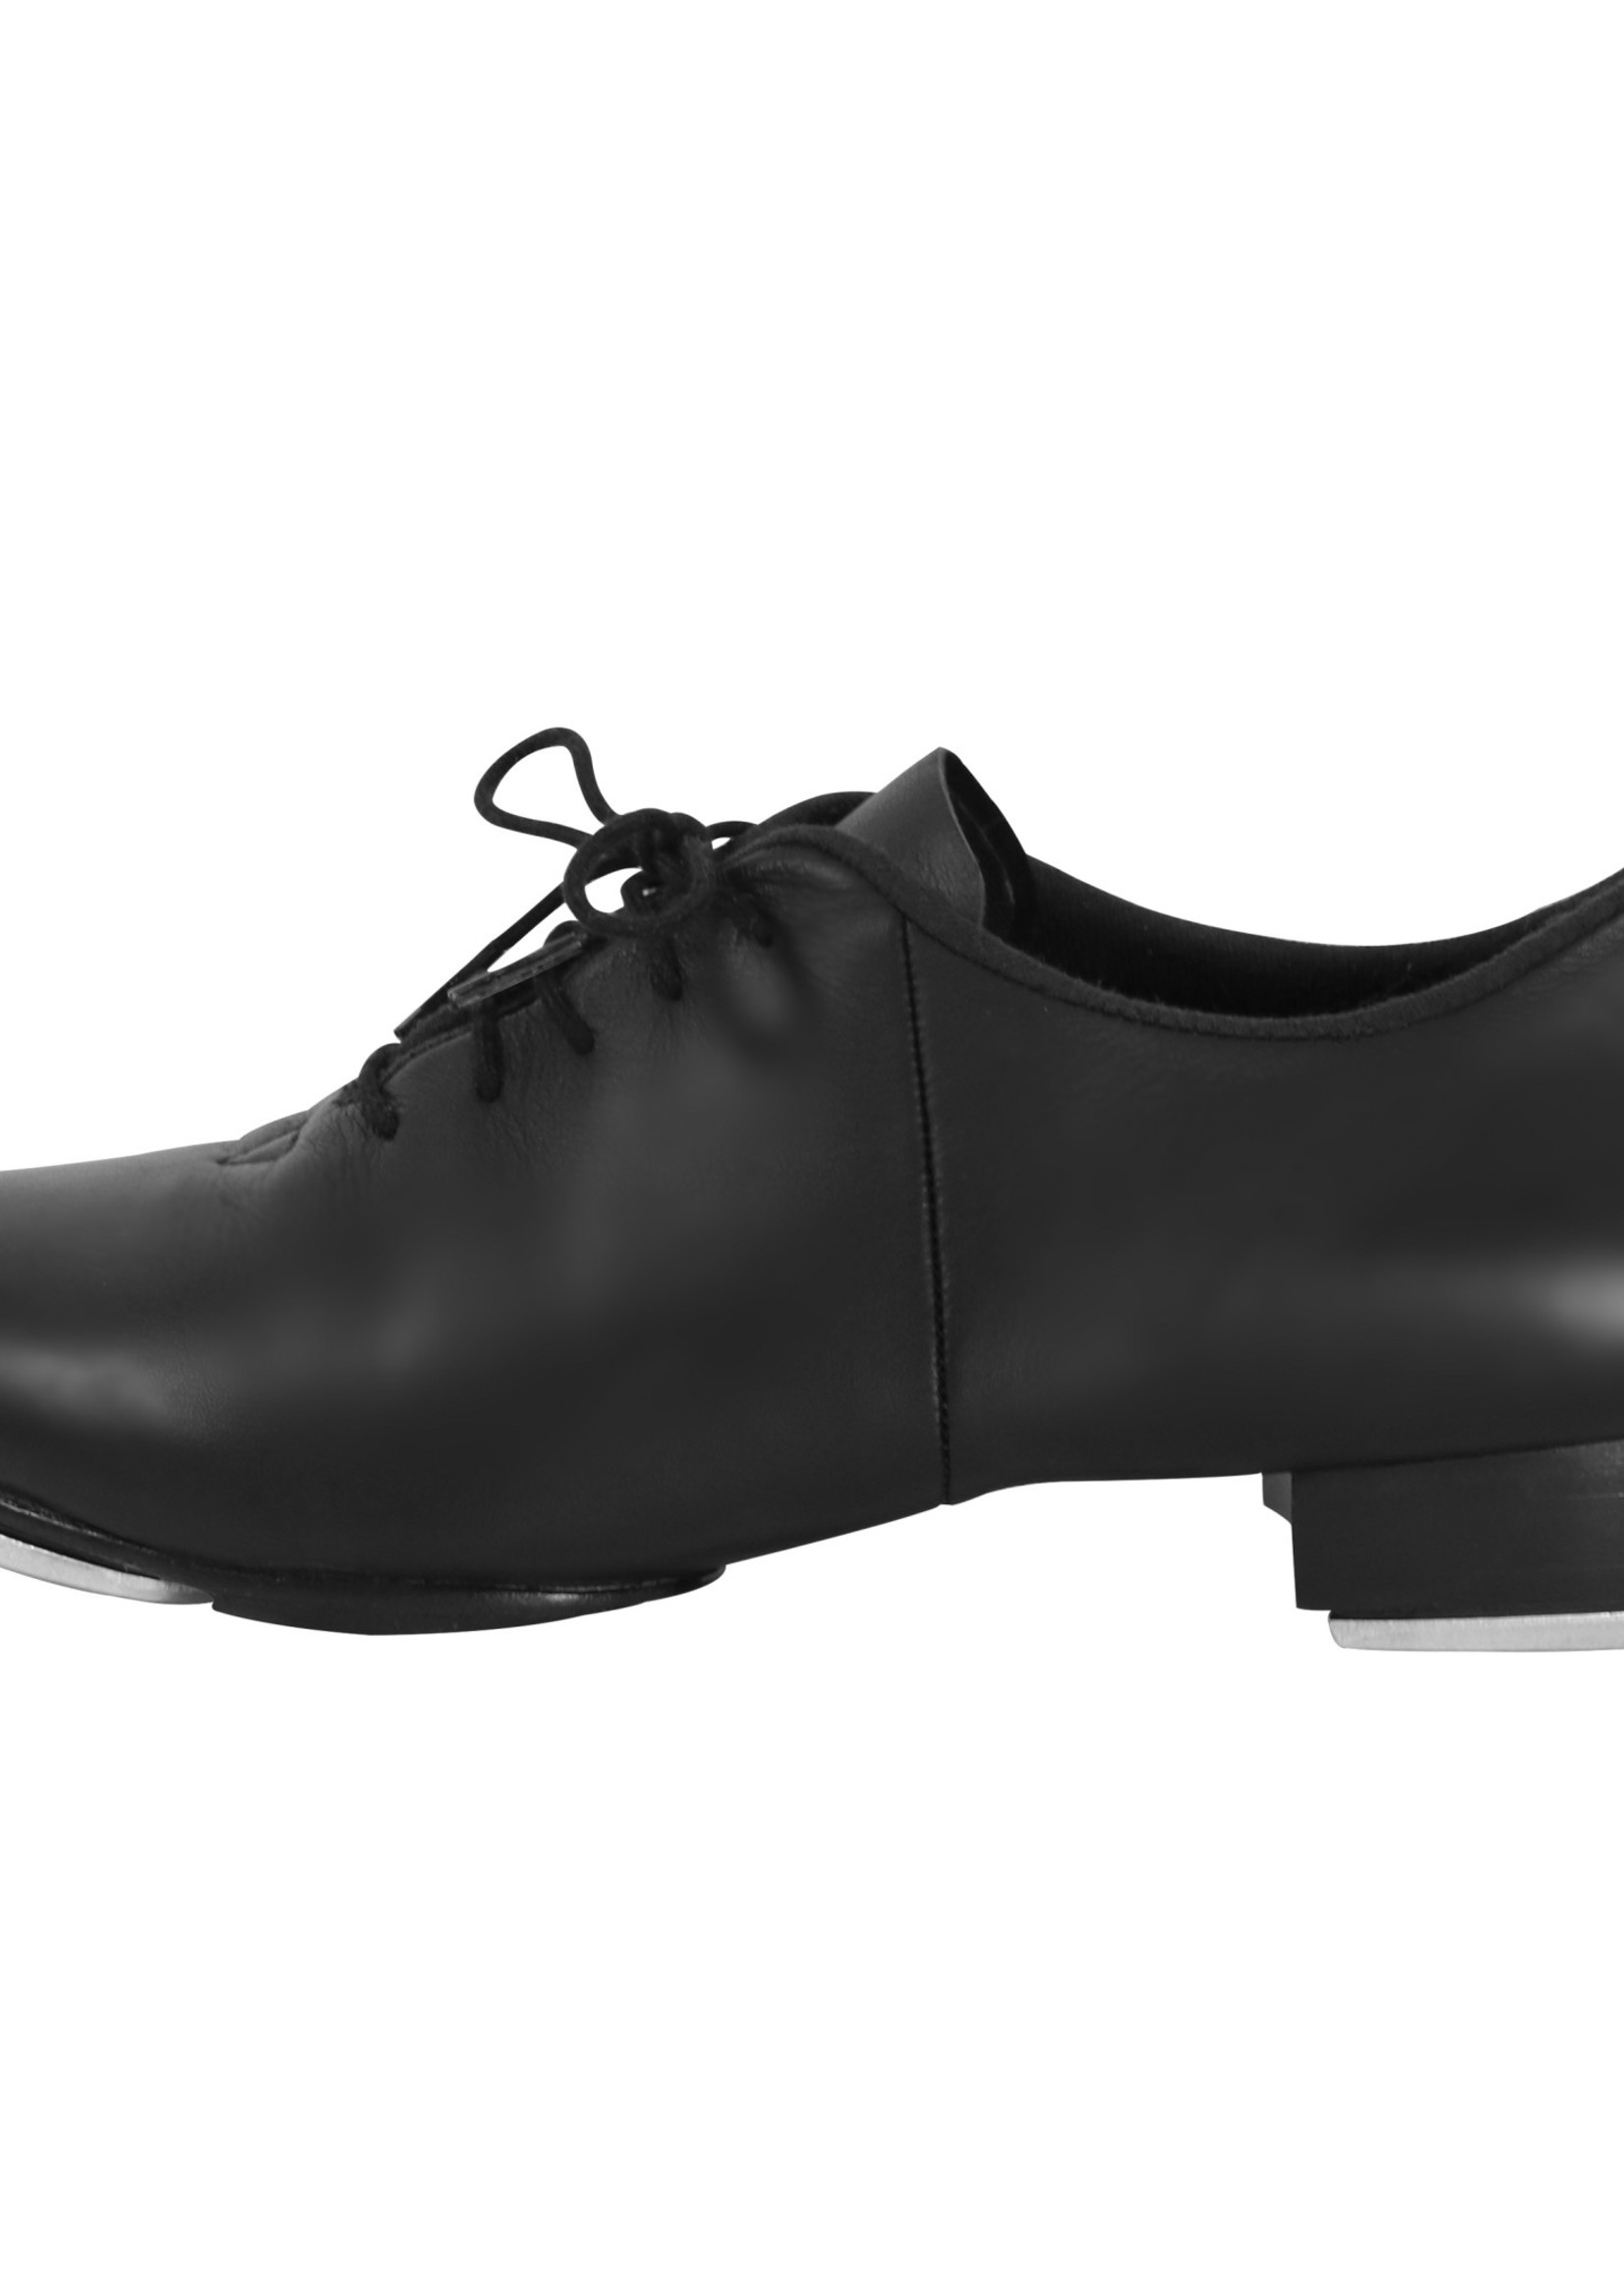 Eurotard Treble Leather Split-Sole Tap Shoes A5524A